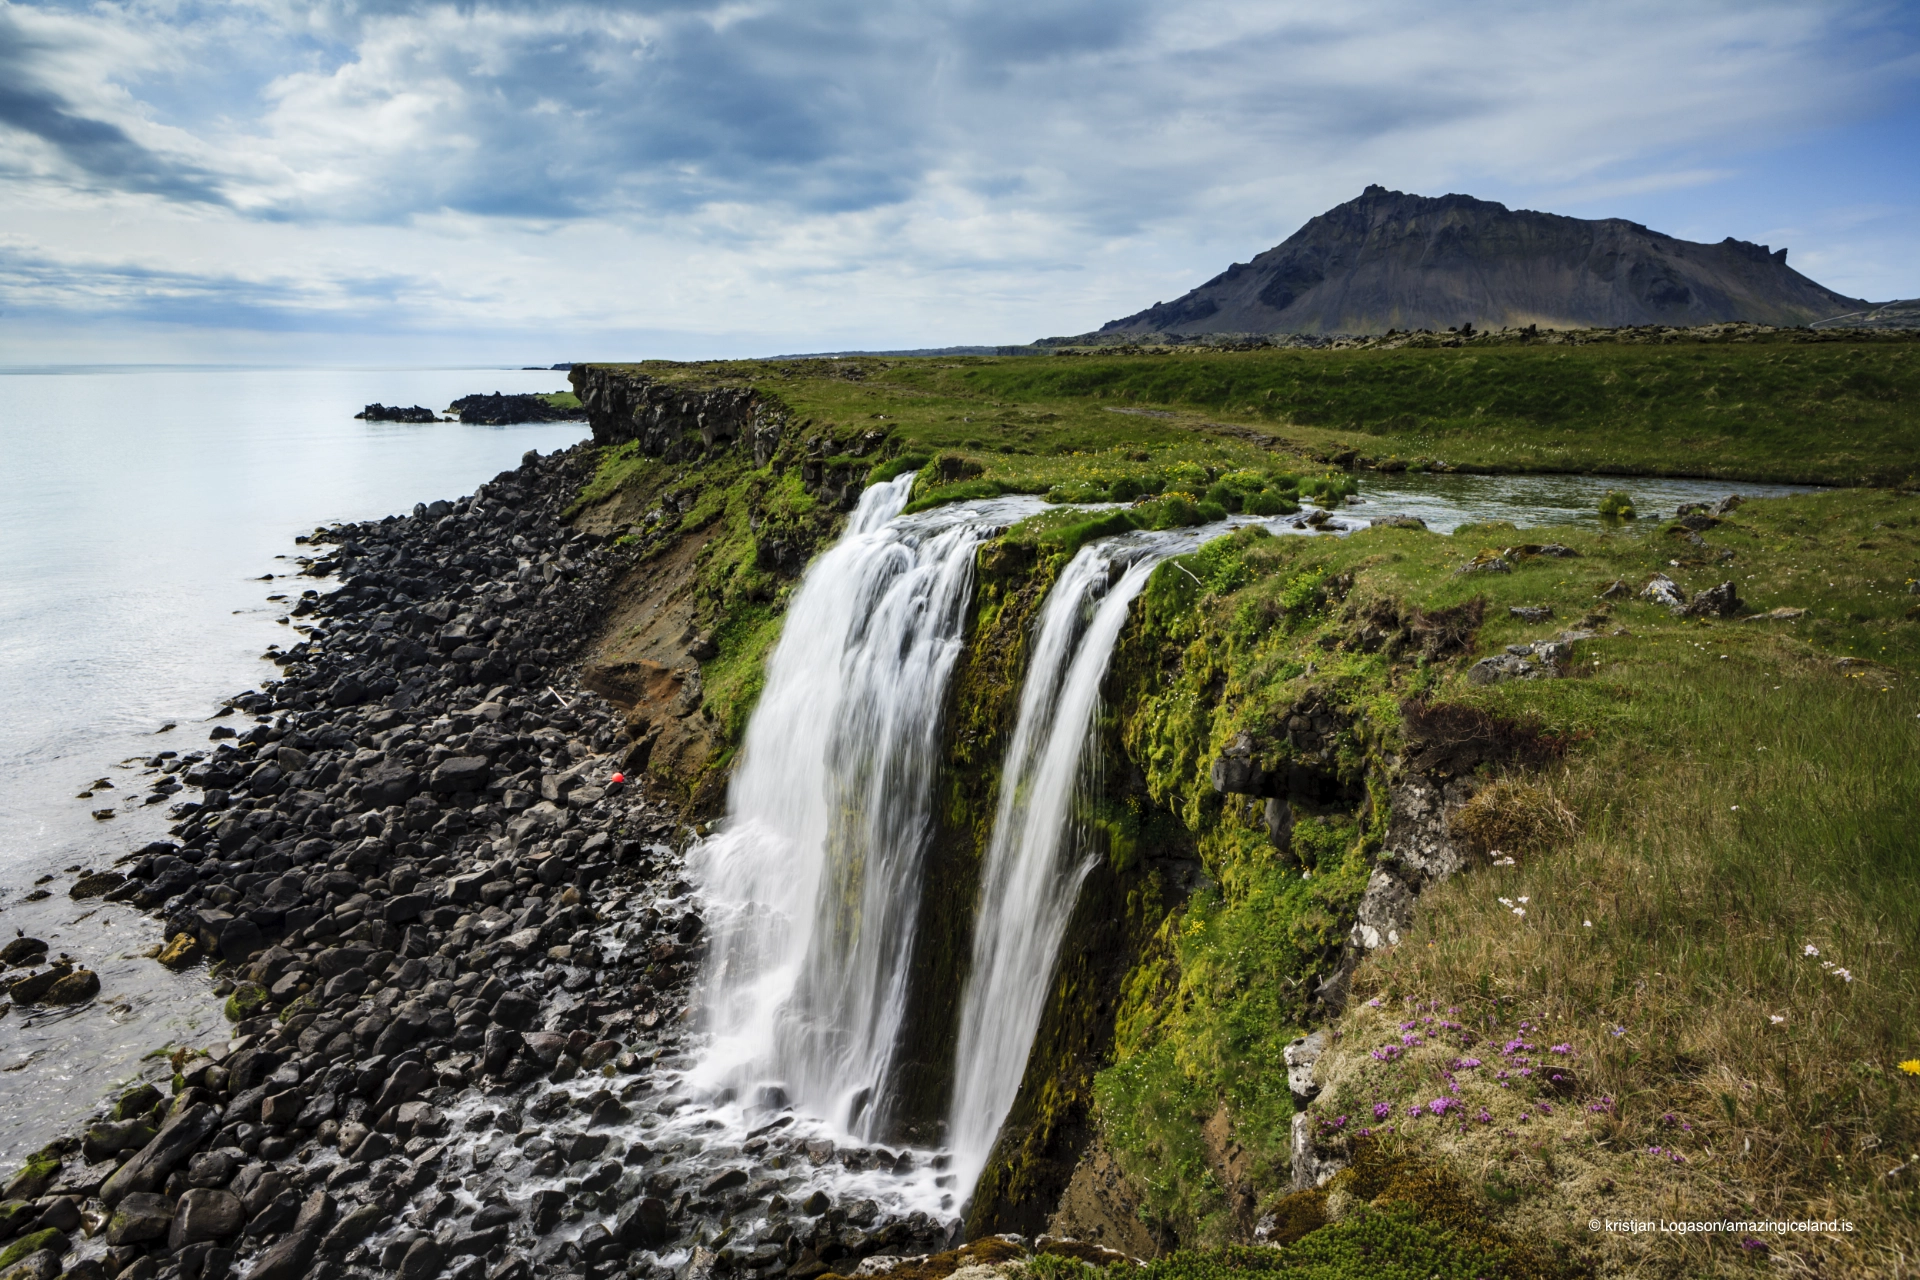 The waterfall þrífyssa